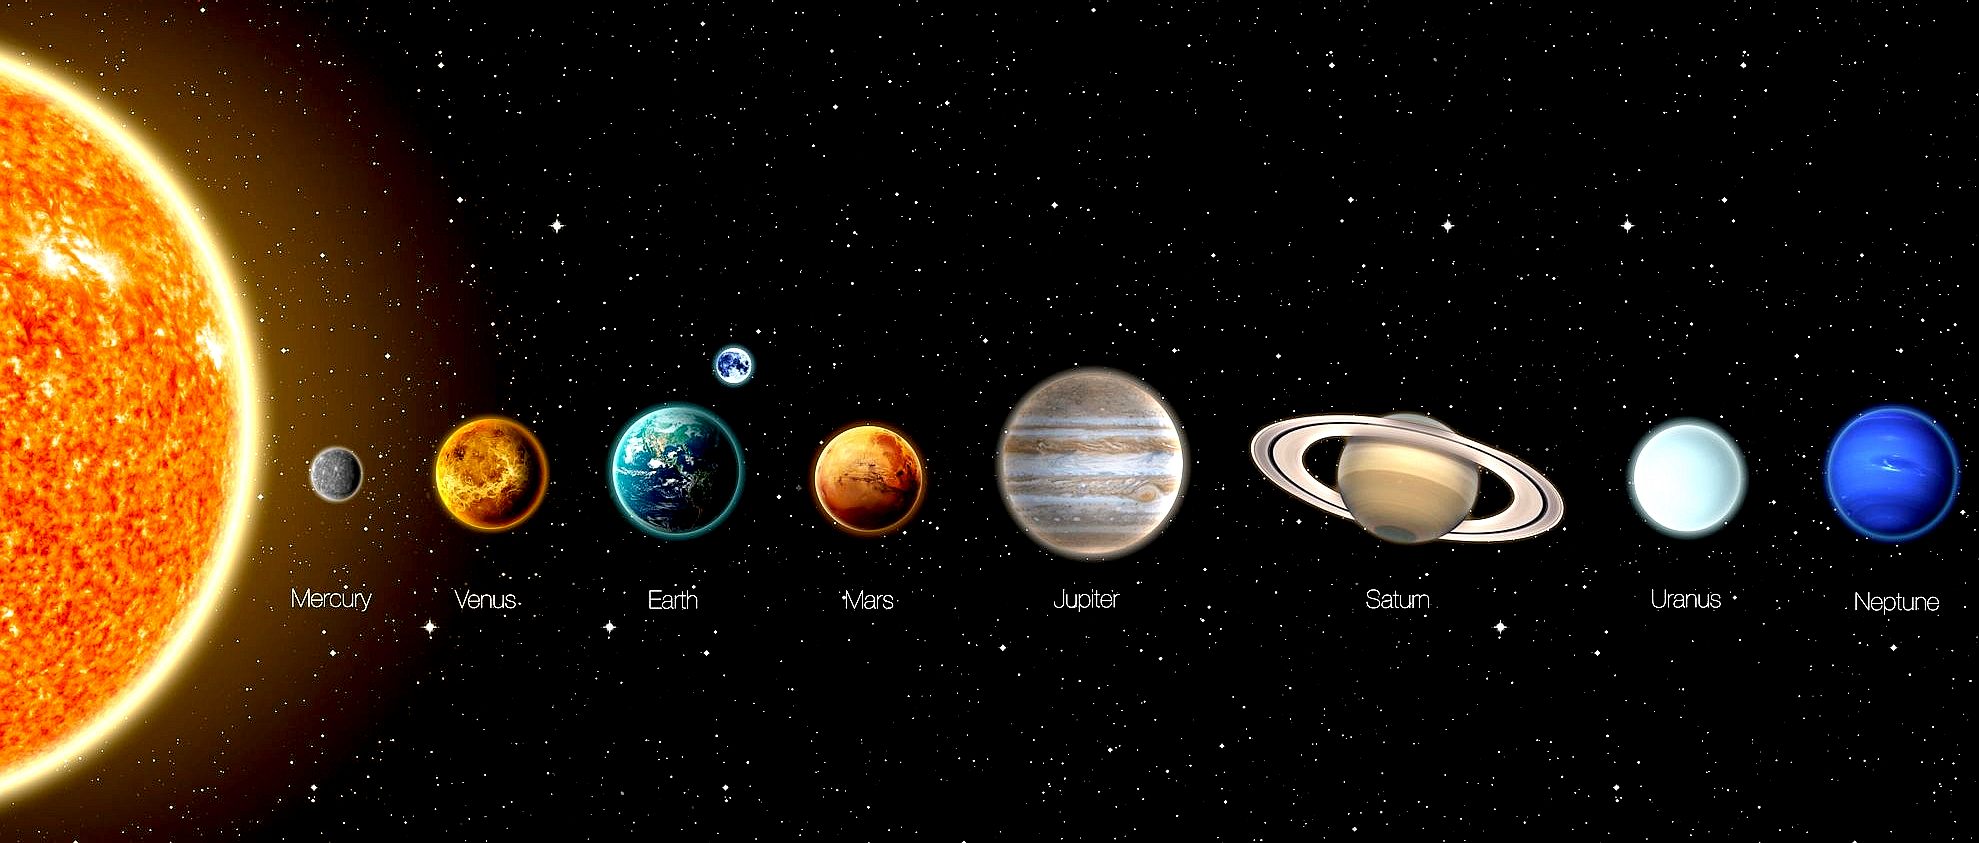 Planets Solar System Mercury Venus Earth Mars Jupiter Saturn Uranus Neptune 